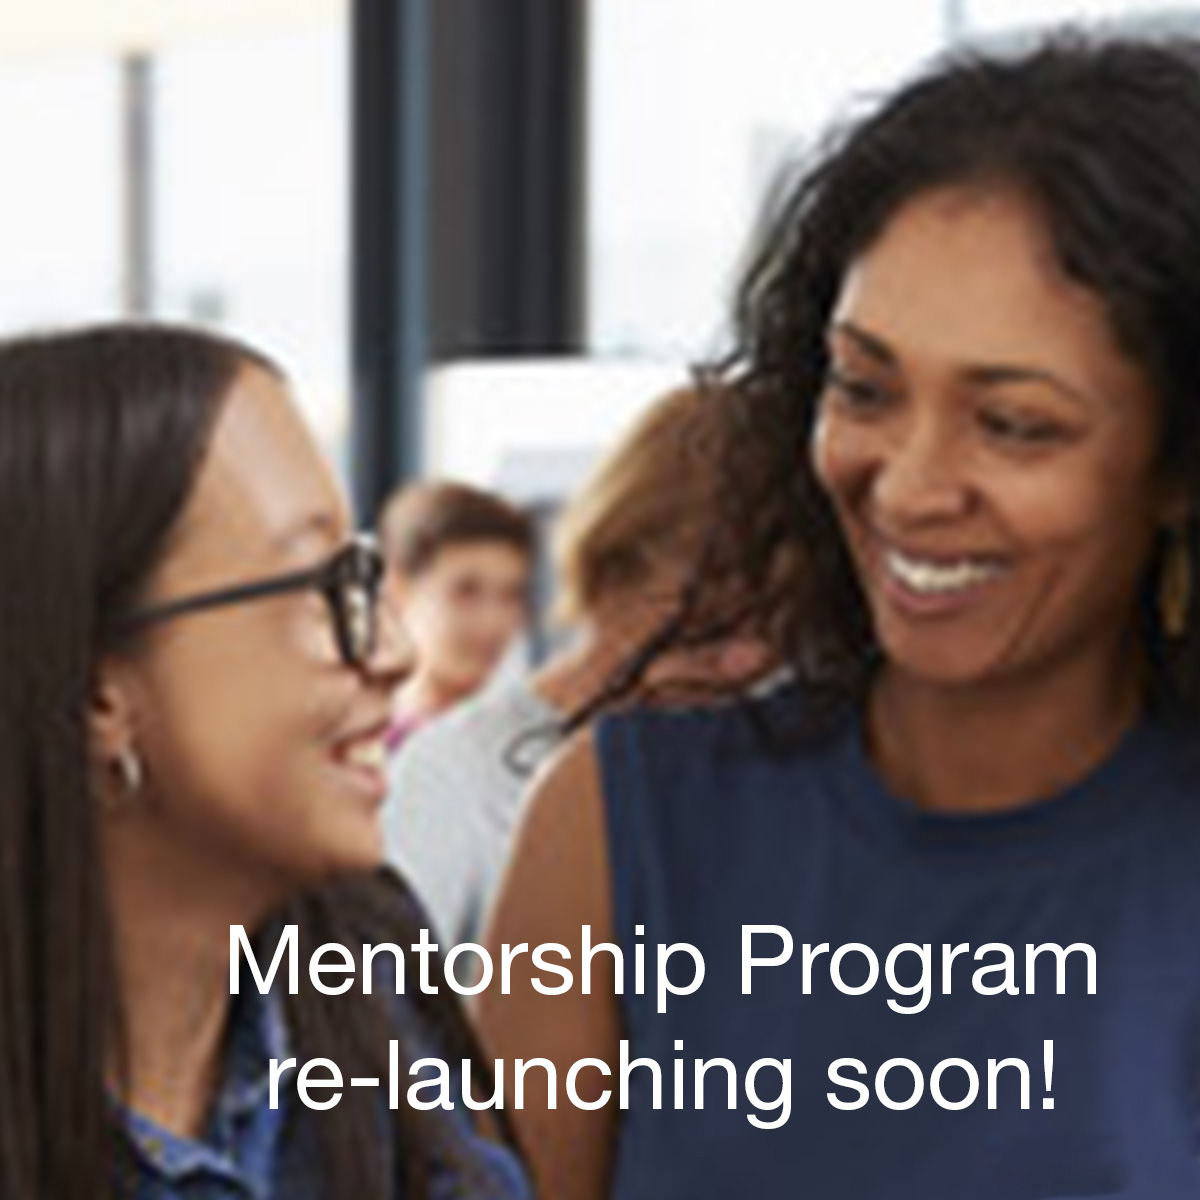 Mentorship program relaunching soon